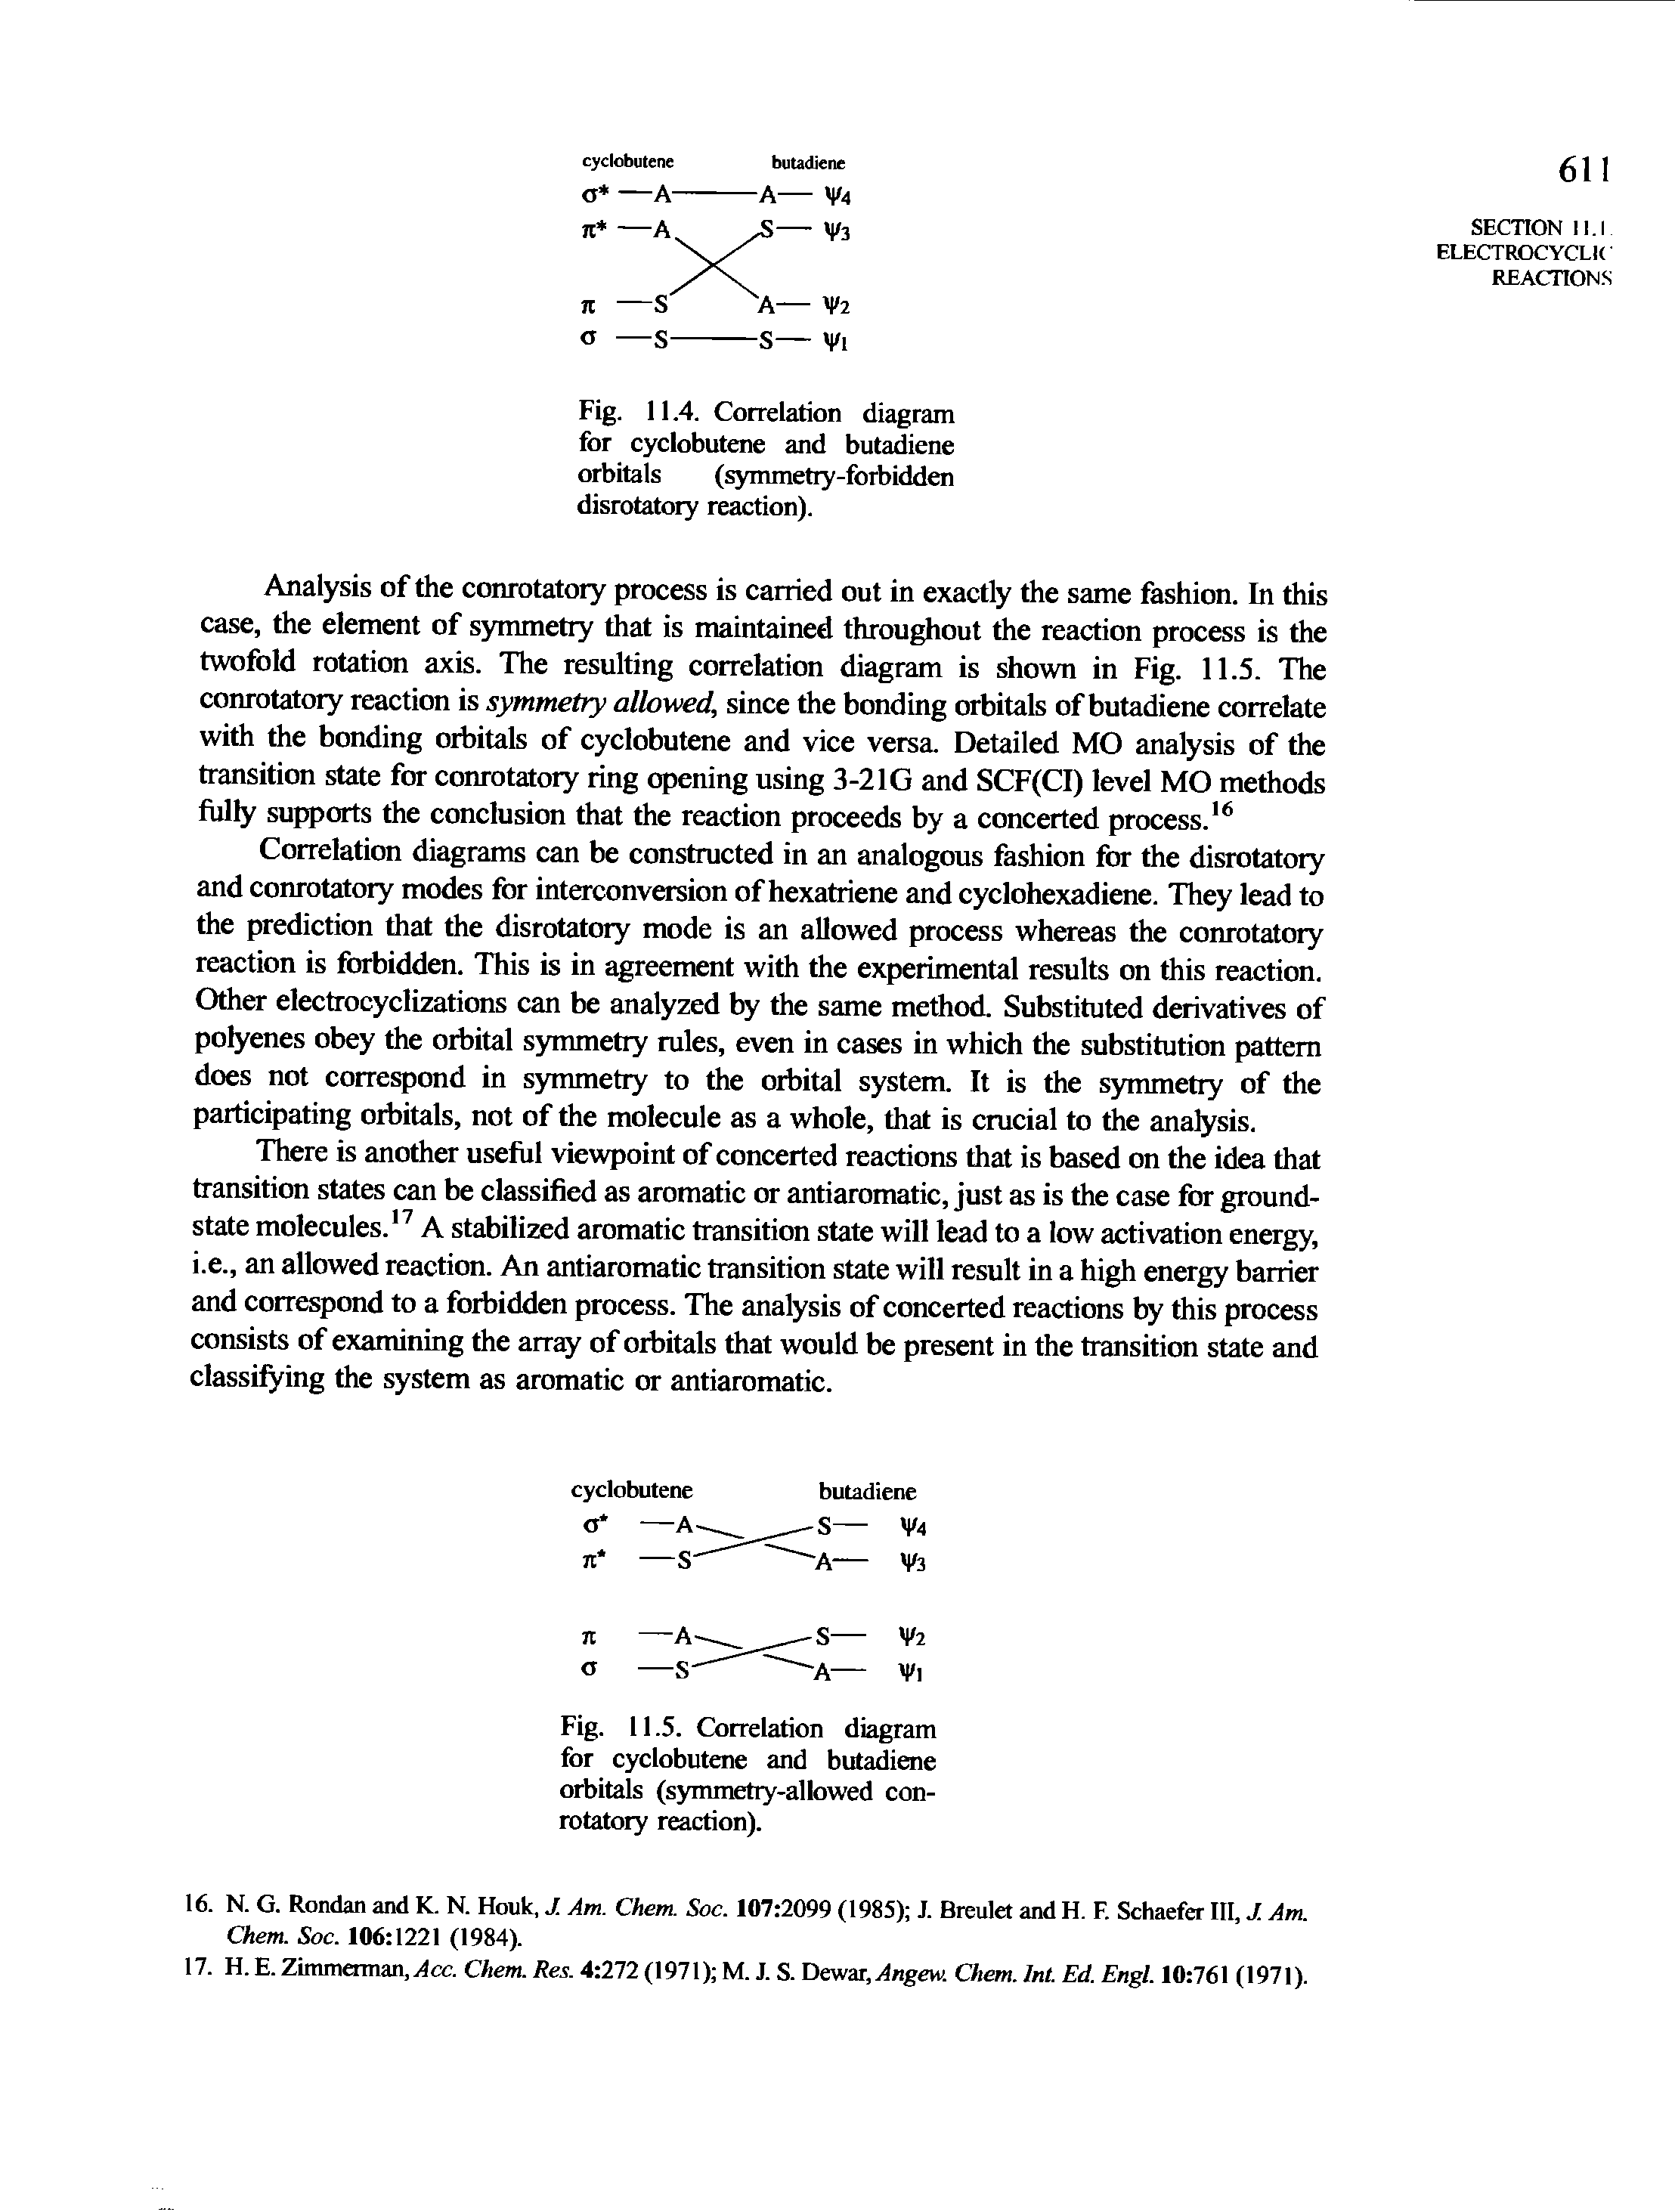 Fig. 11.5. Correlation diagram for cyclobutene and butadiene orbitals (symmetry-allowed conrotatory reaction).